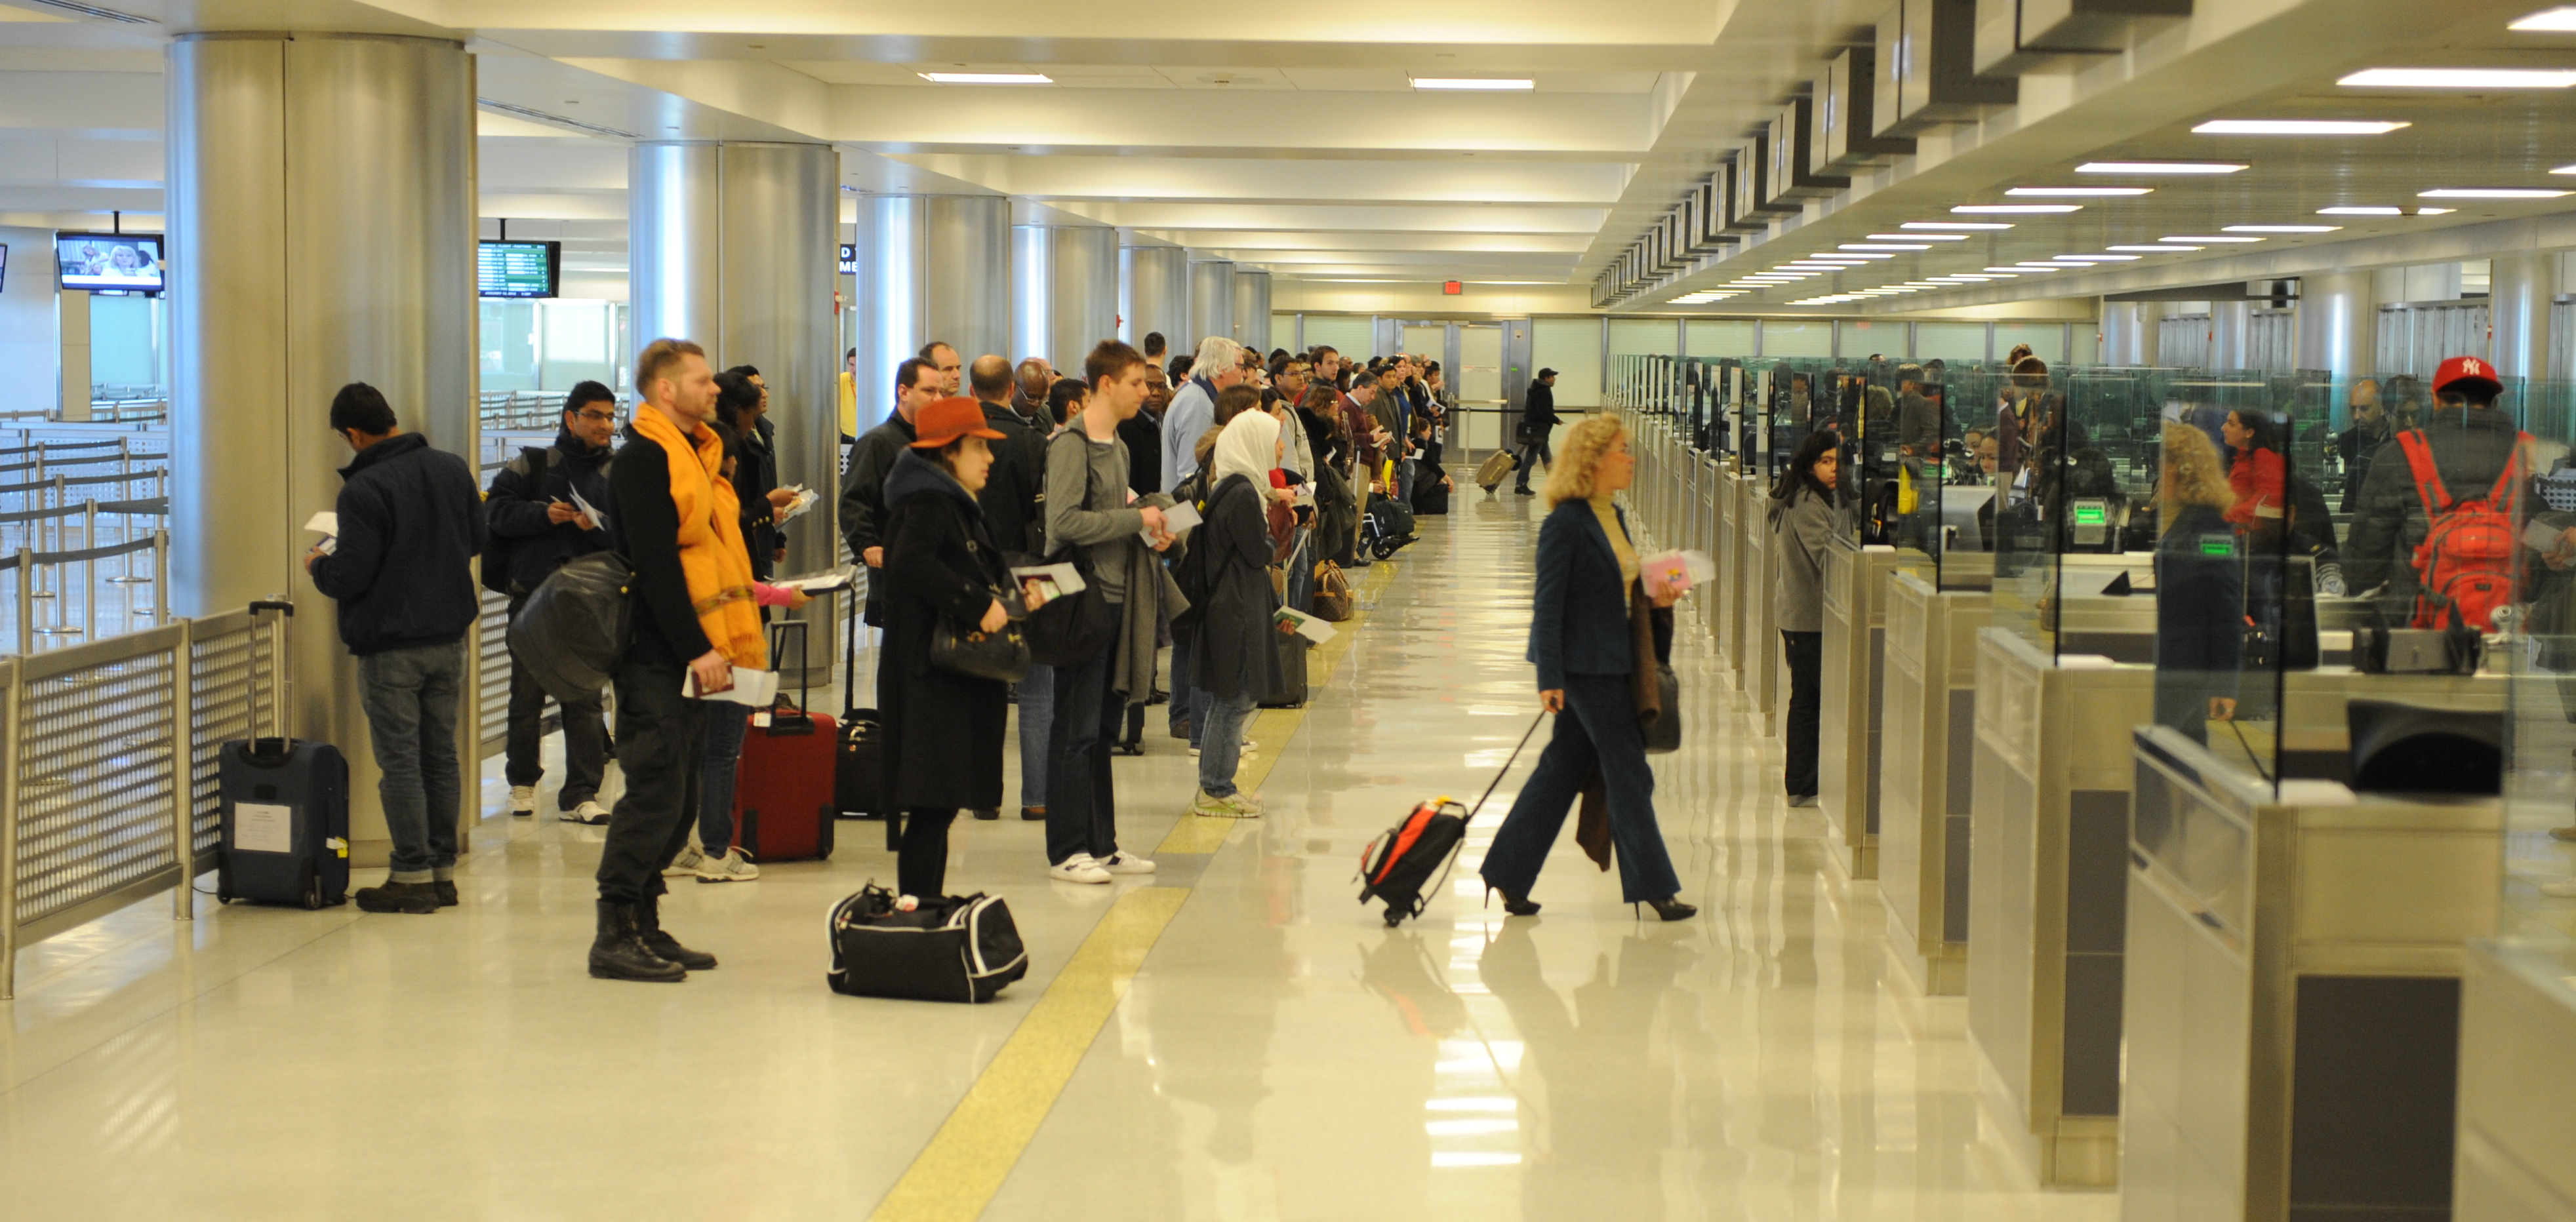 Passengers prepare to pass through international customs at Dulles International Airport on January 13, 2012, in Dulles, VA. (Jahi Chikwendiu/The Washington Post via Getty Images)